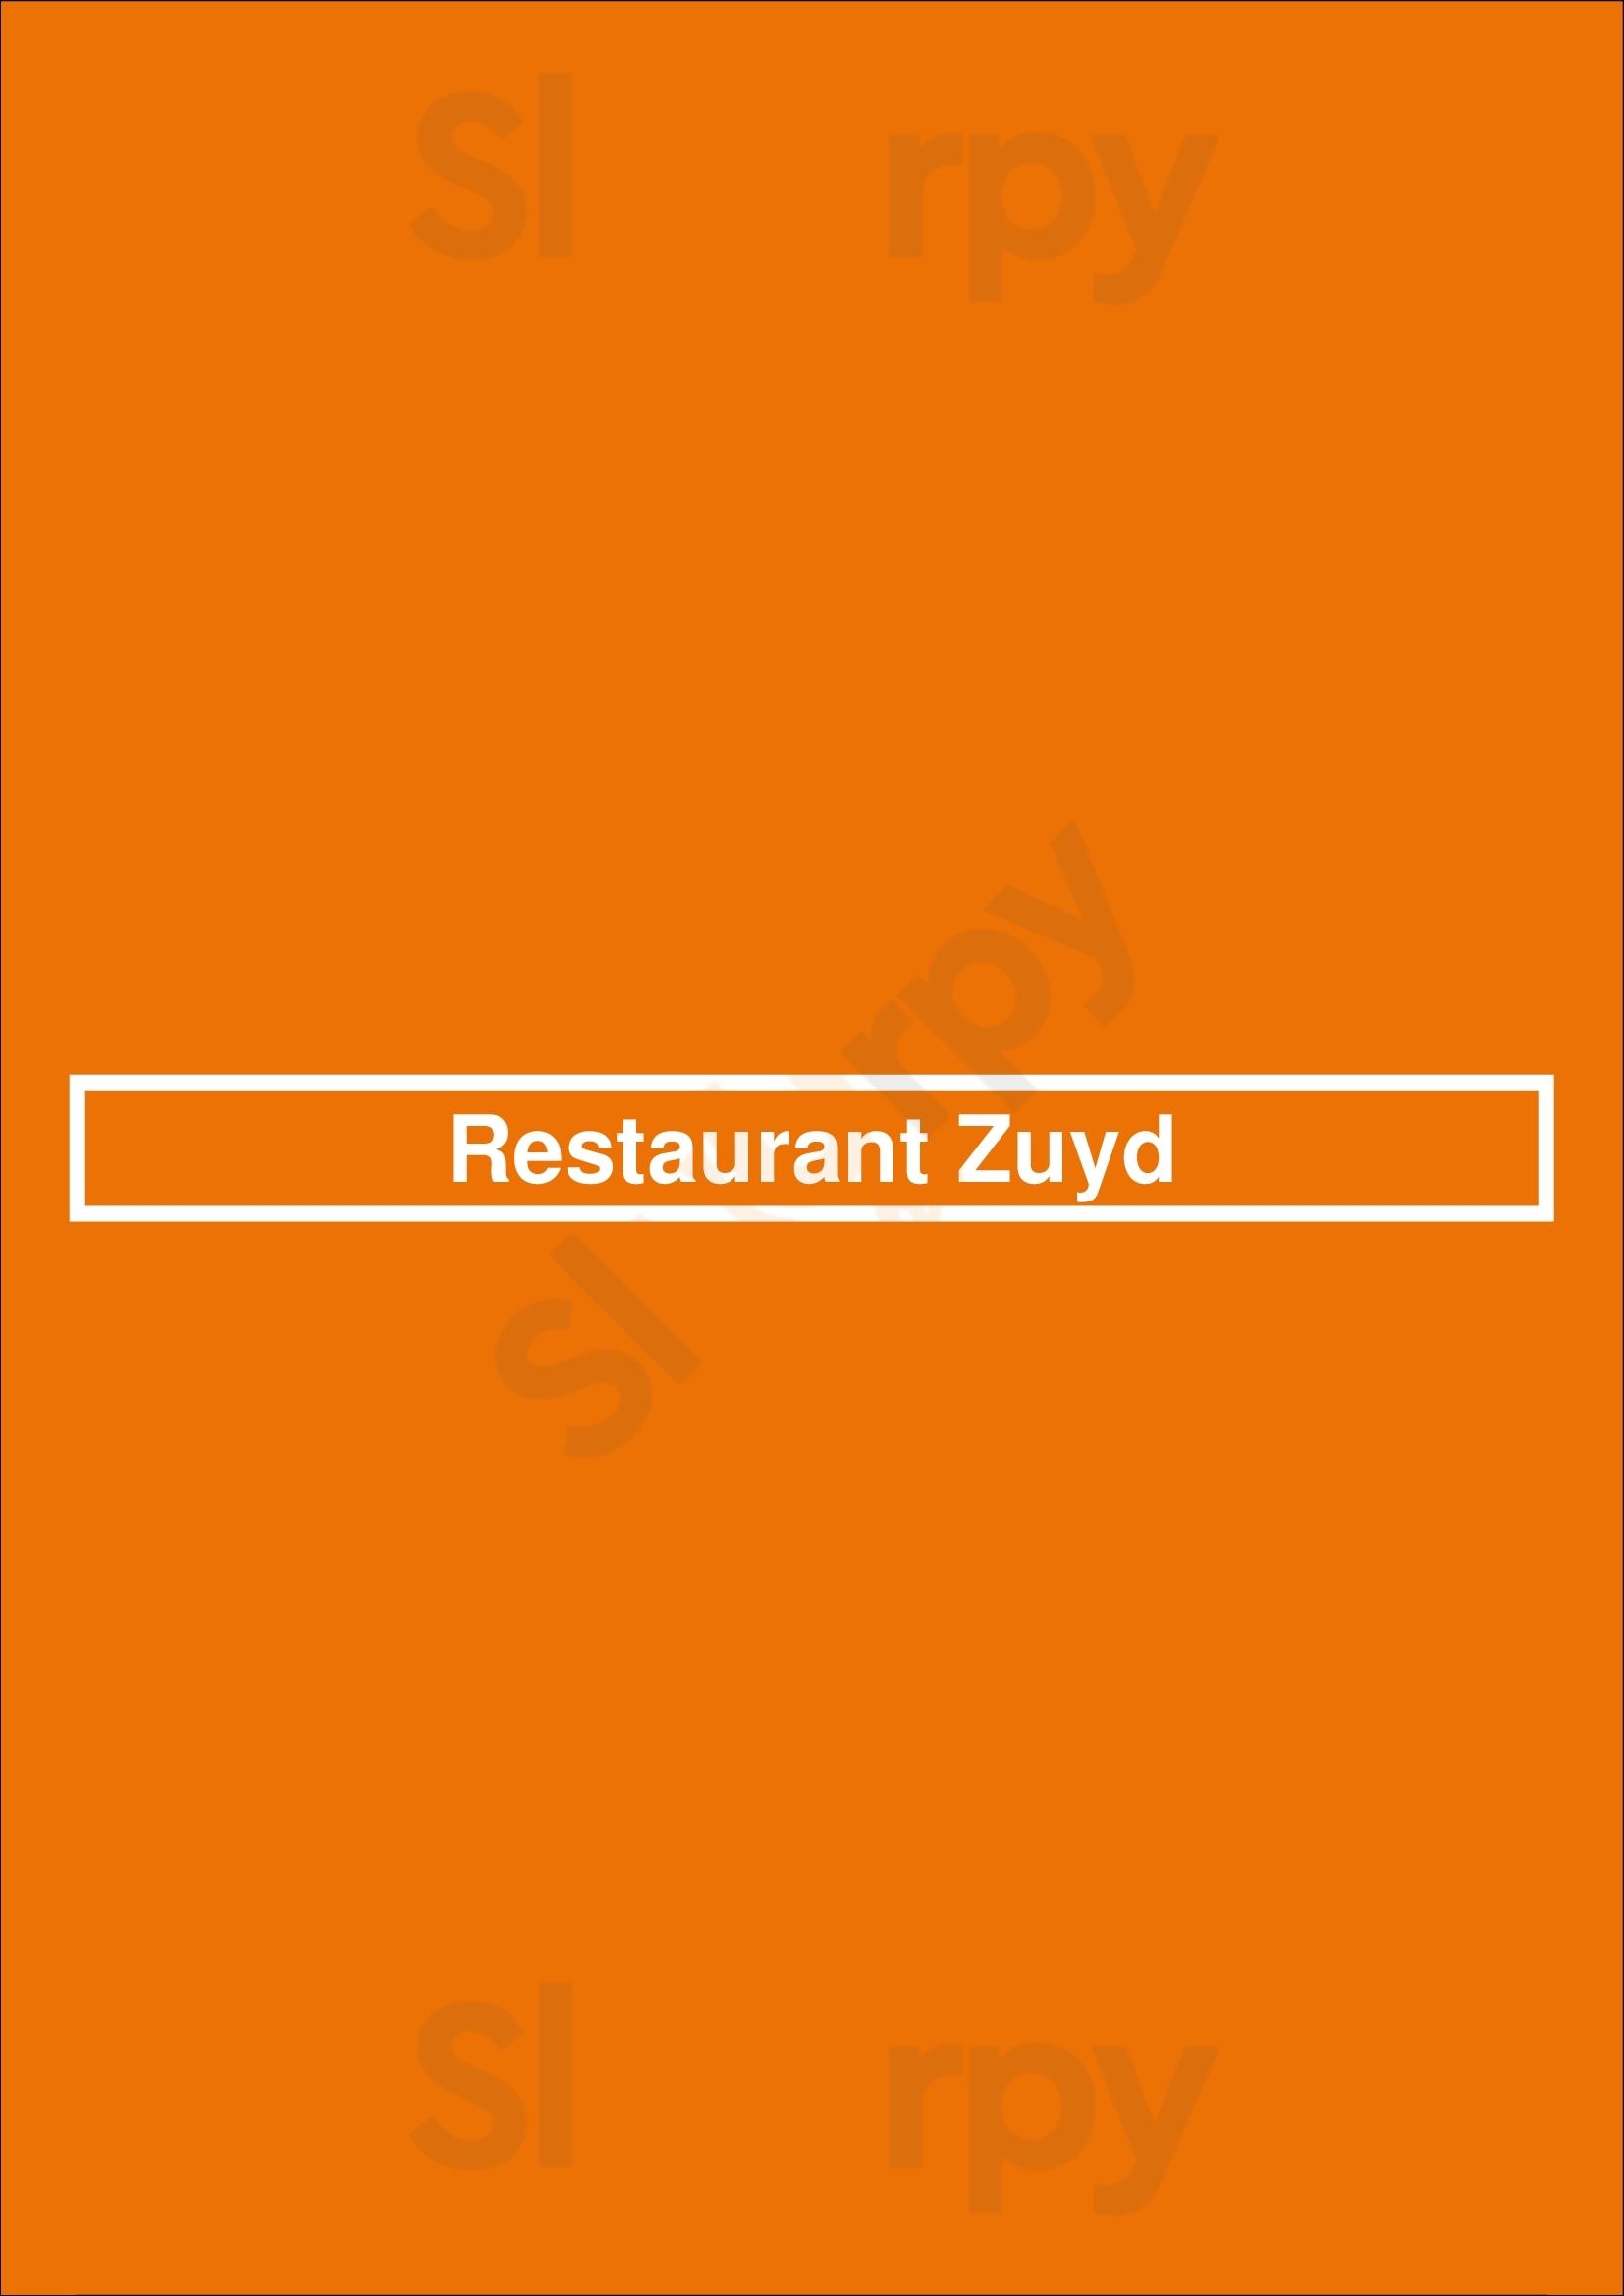 Restaurant Zuyd Breda Menu - 1